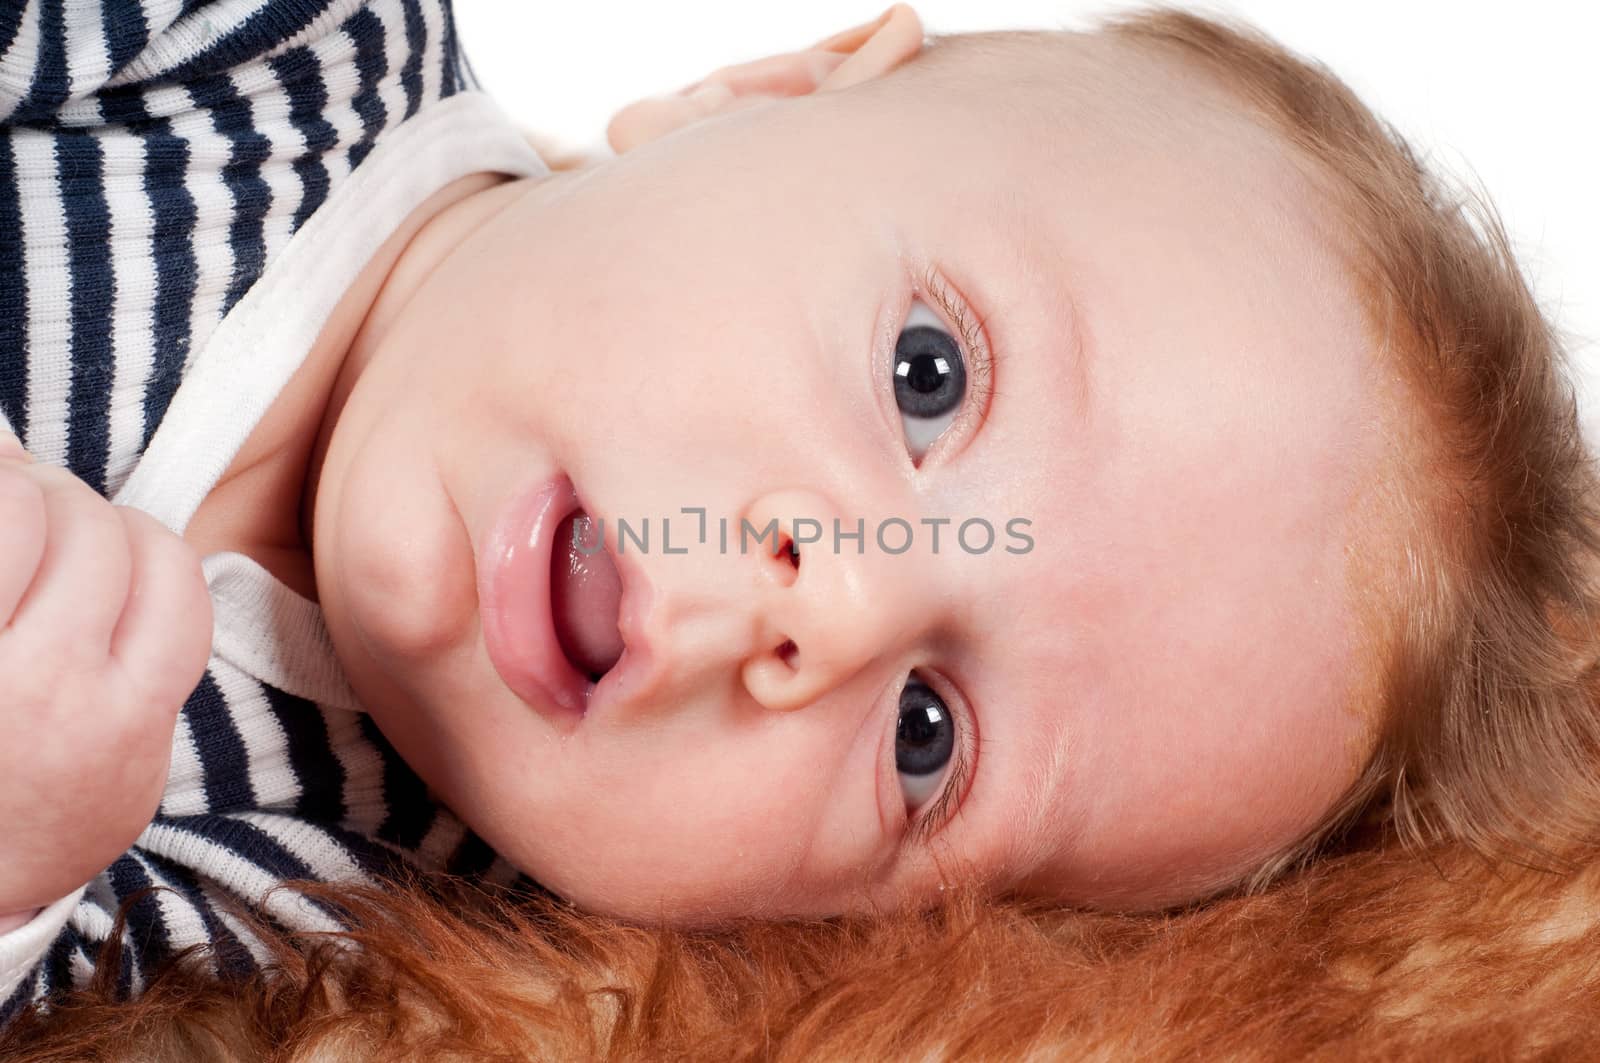 Newborn baby, close-up portrait by anytka